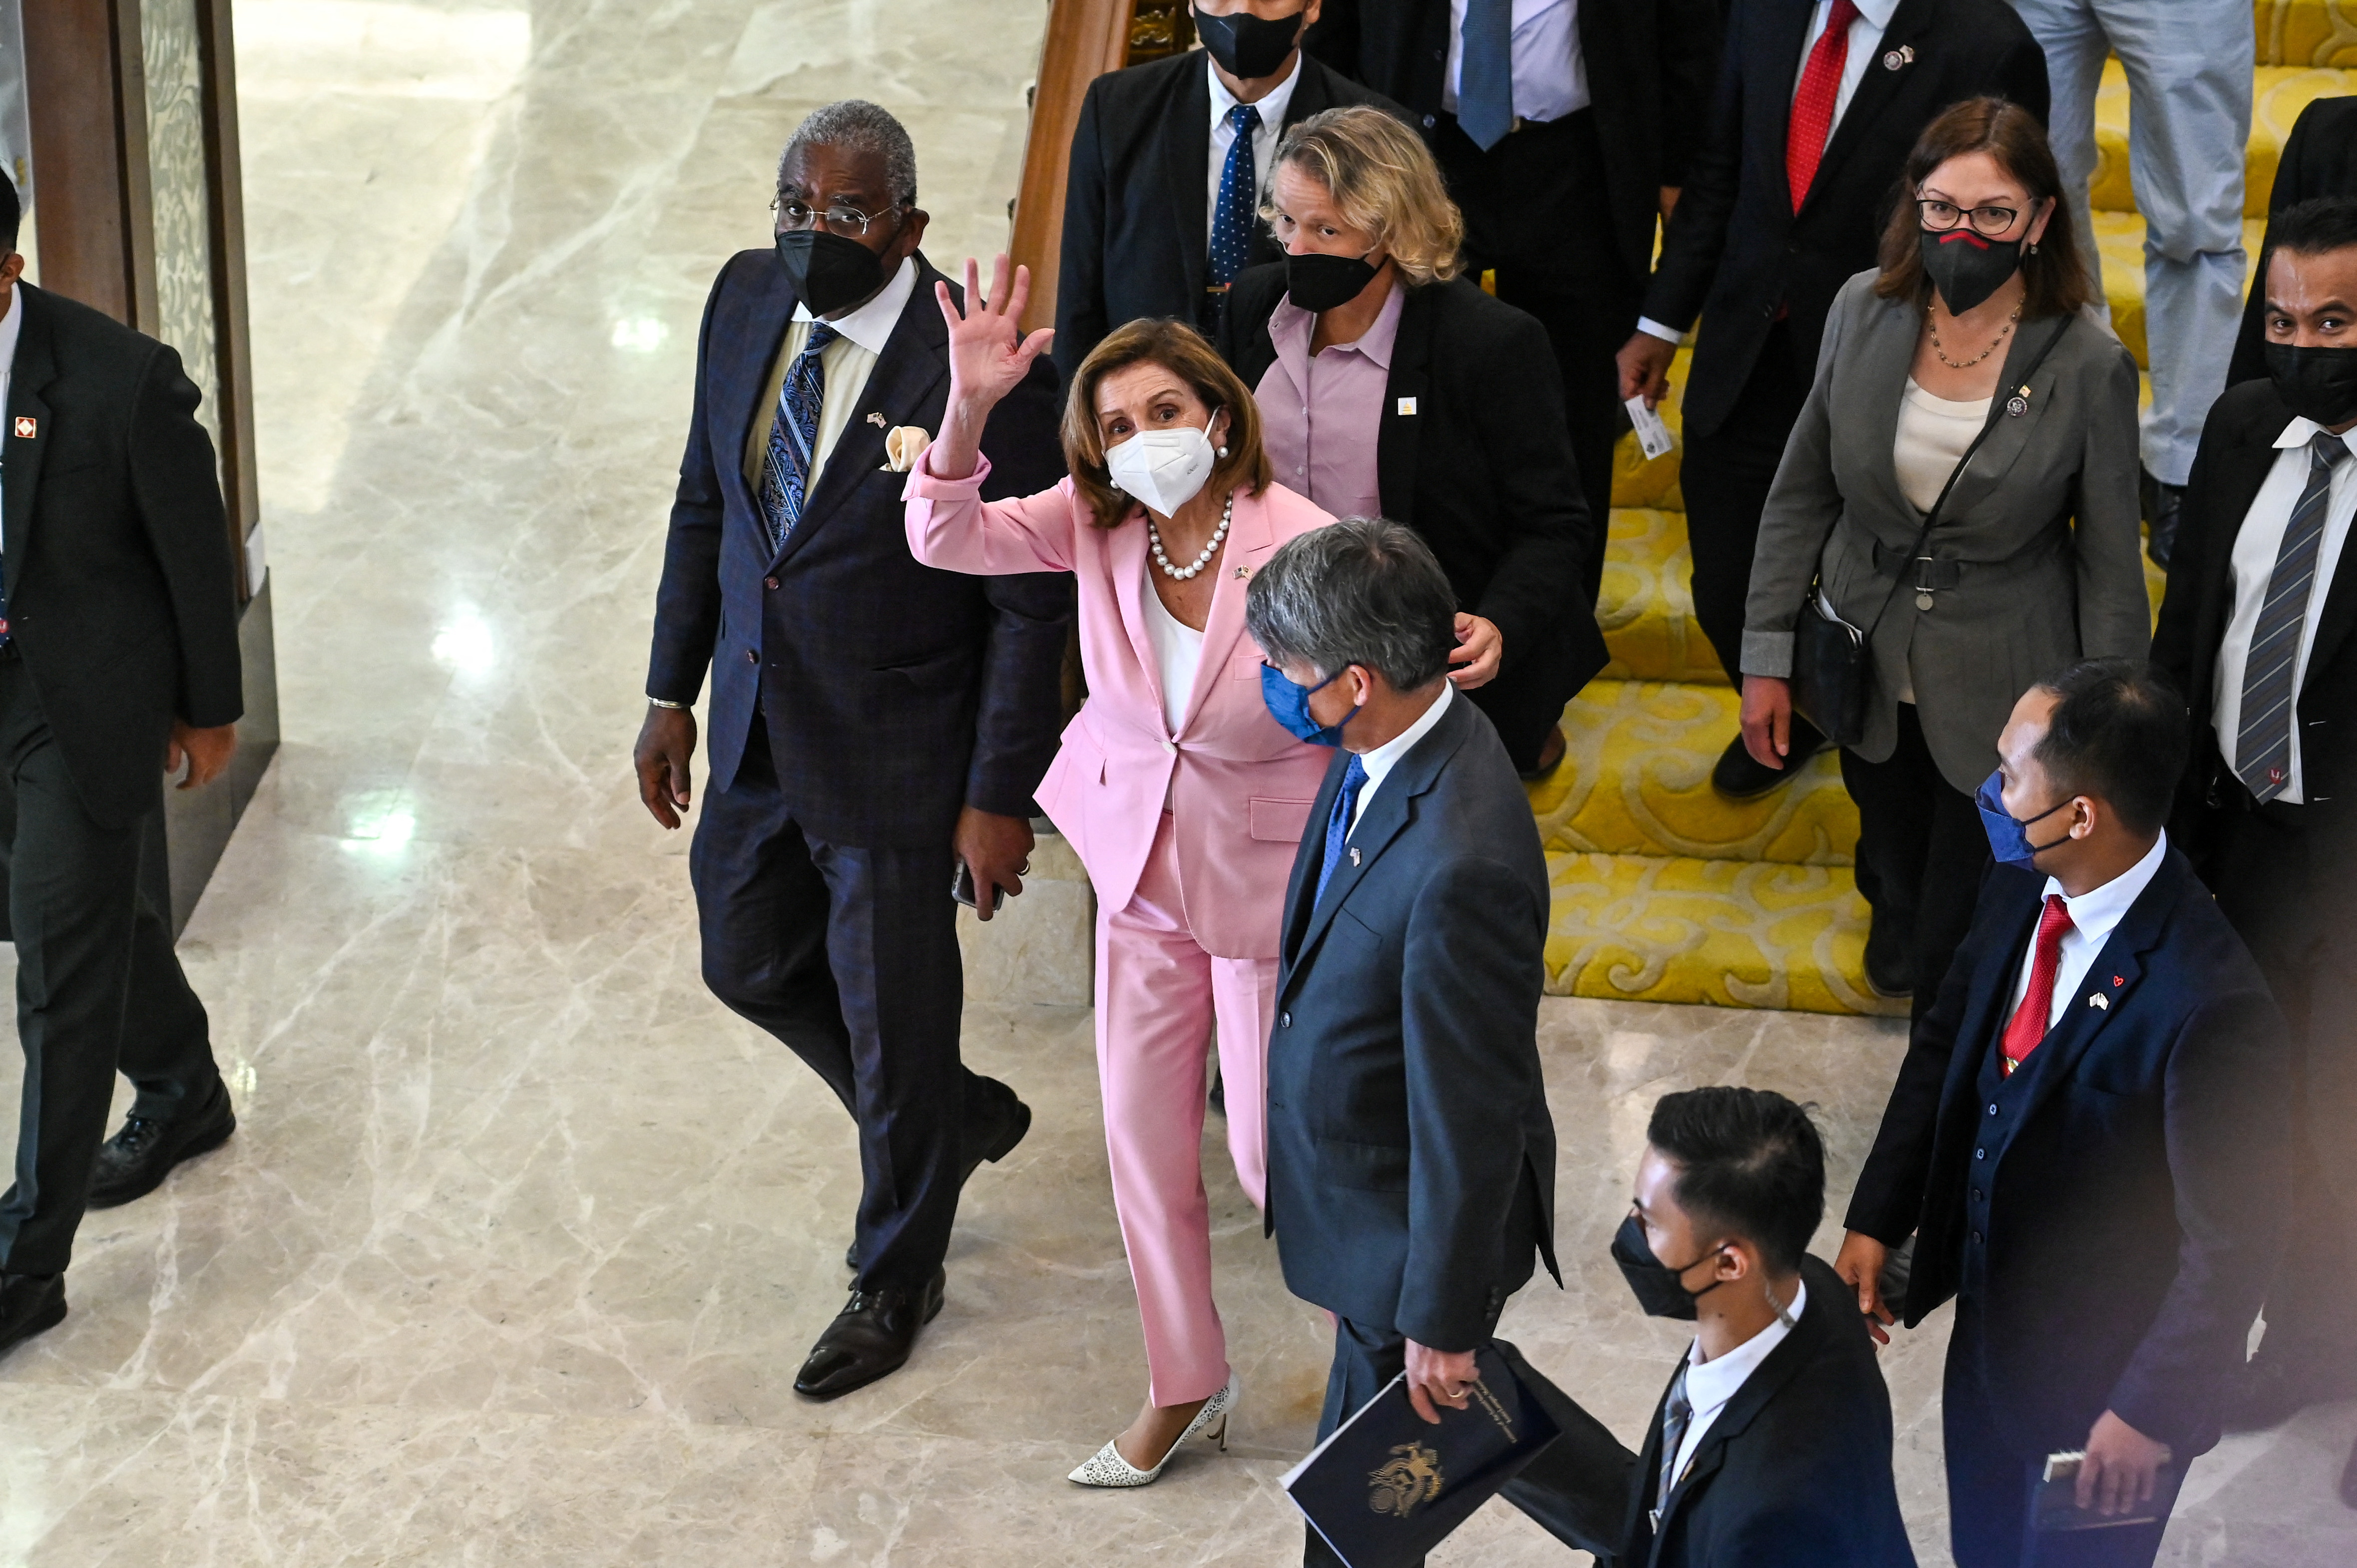 Nancy Pelosi waves after her meeting at the Malaysian parliament in Kuala Lumpur (Malaysian Department of Information/Nazri Rapaai/REUTERS)